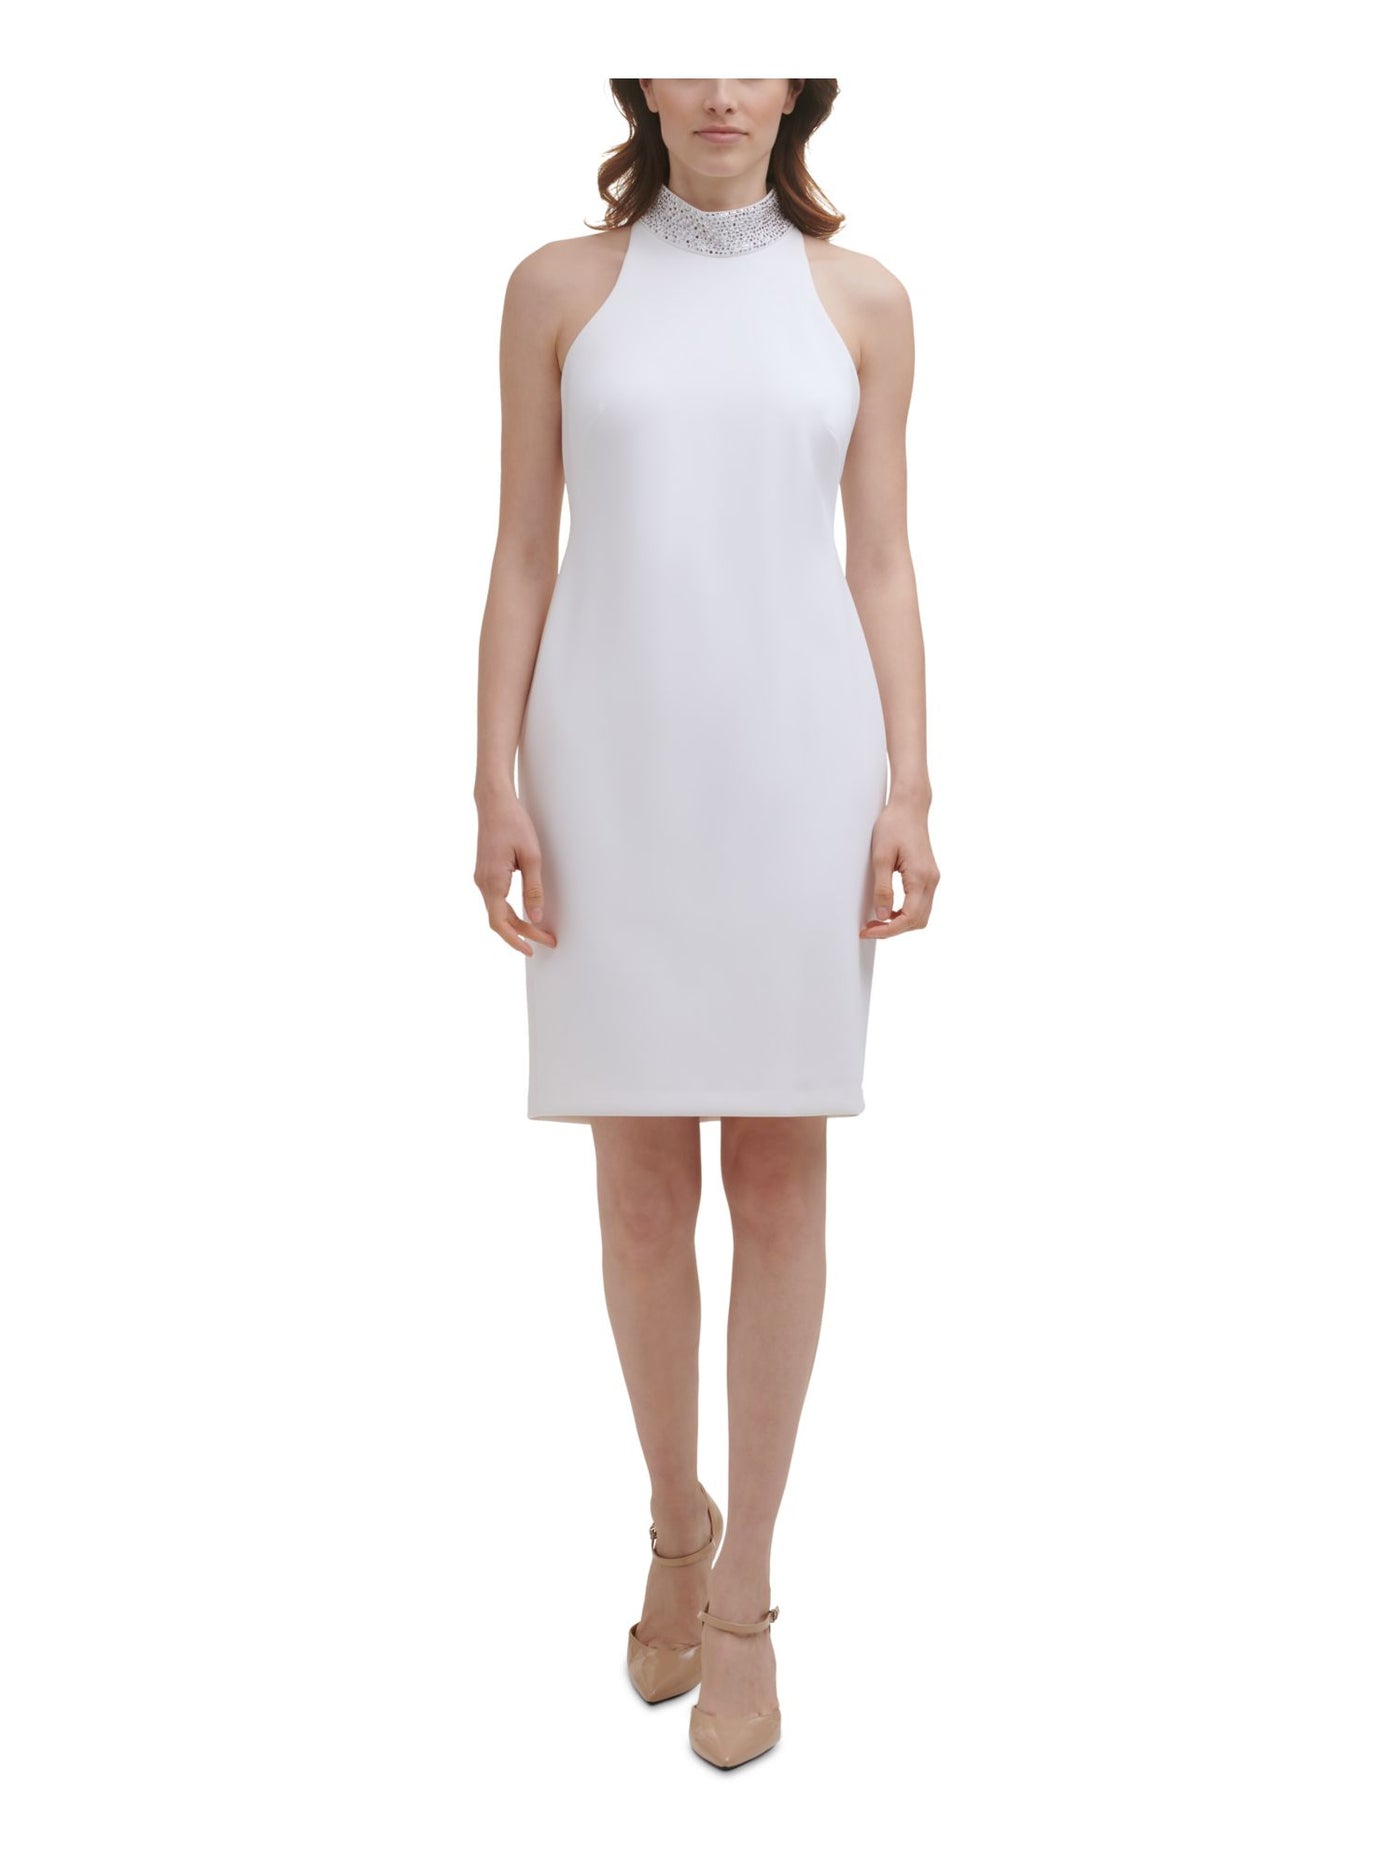 CALVIN KLEIN Womens White Stretch Embellished Zippered Sleeveless Mock Neck Above The Knee Formal Sheath Dress 6